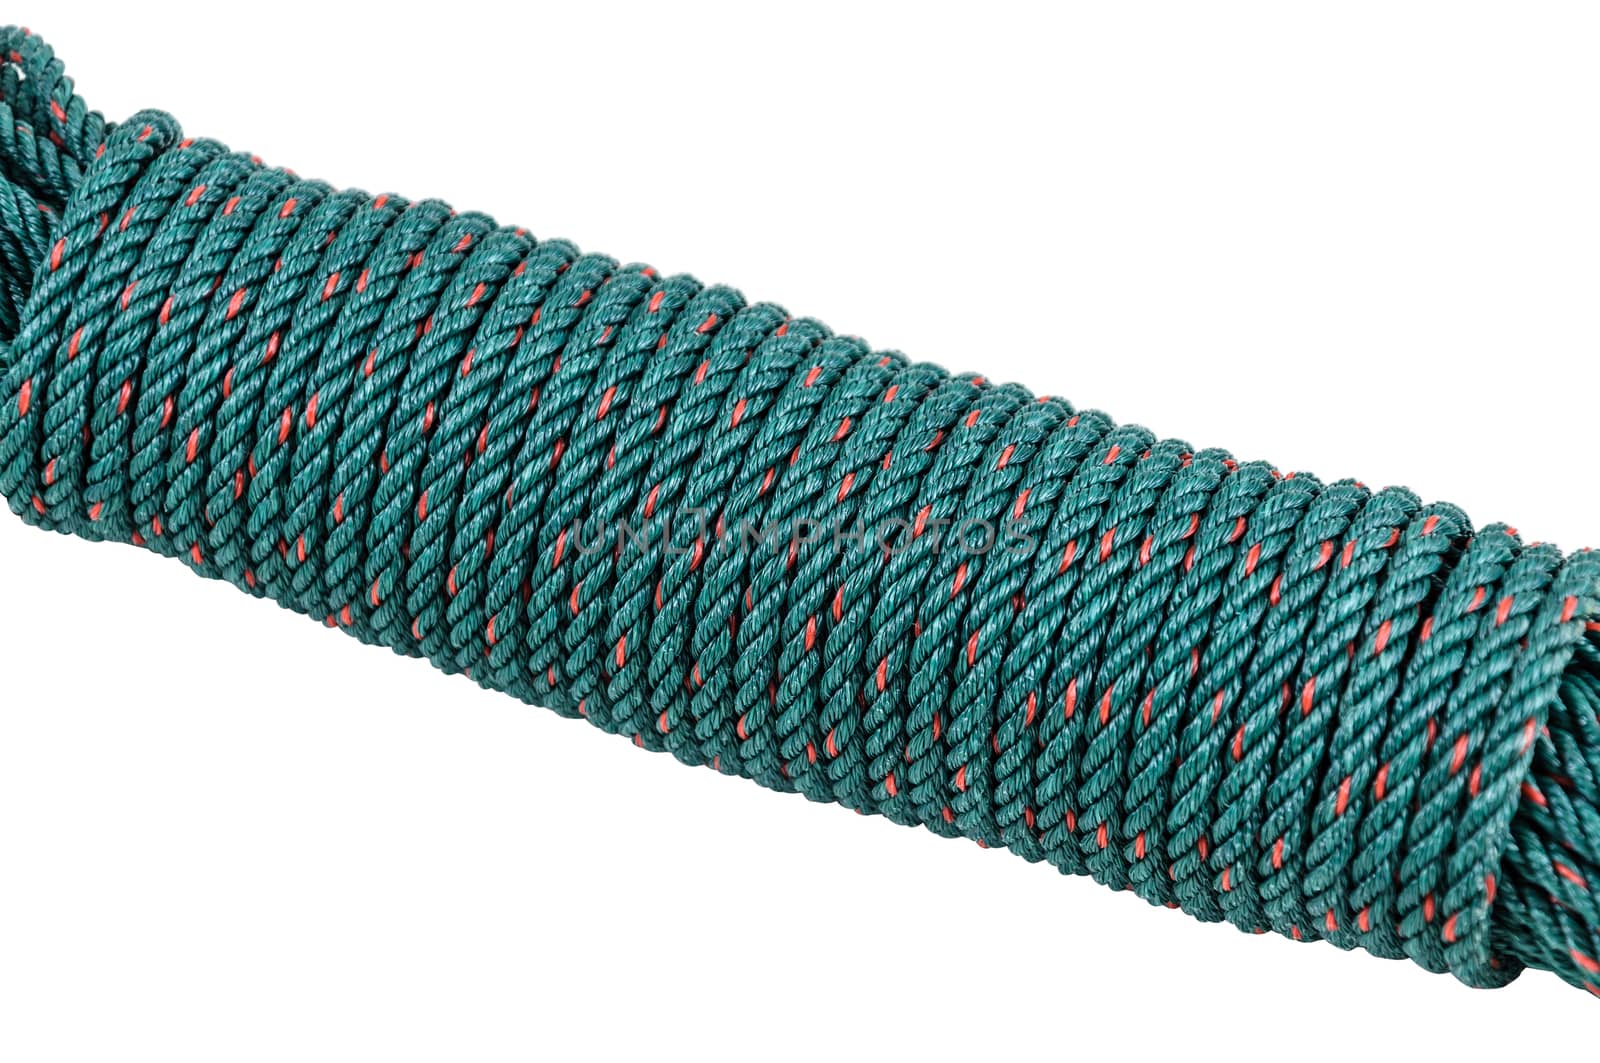 Green nylon rope isolated on white background